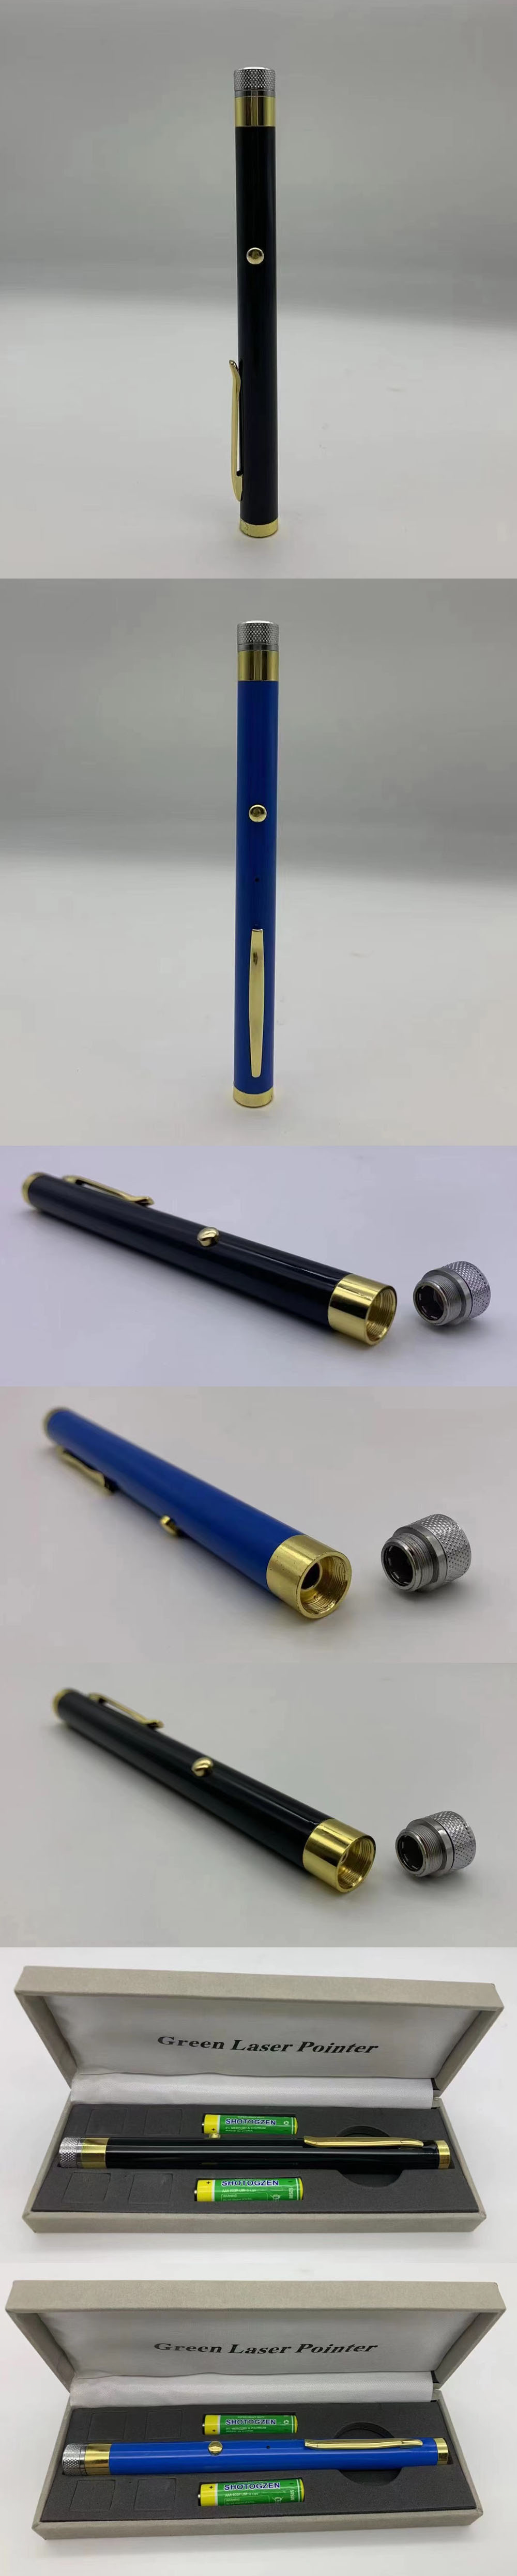 Penna laser a luce blu